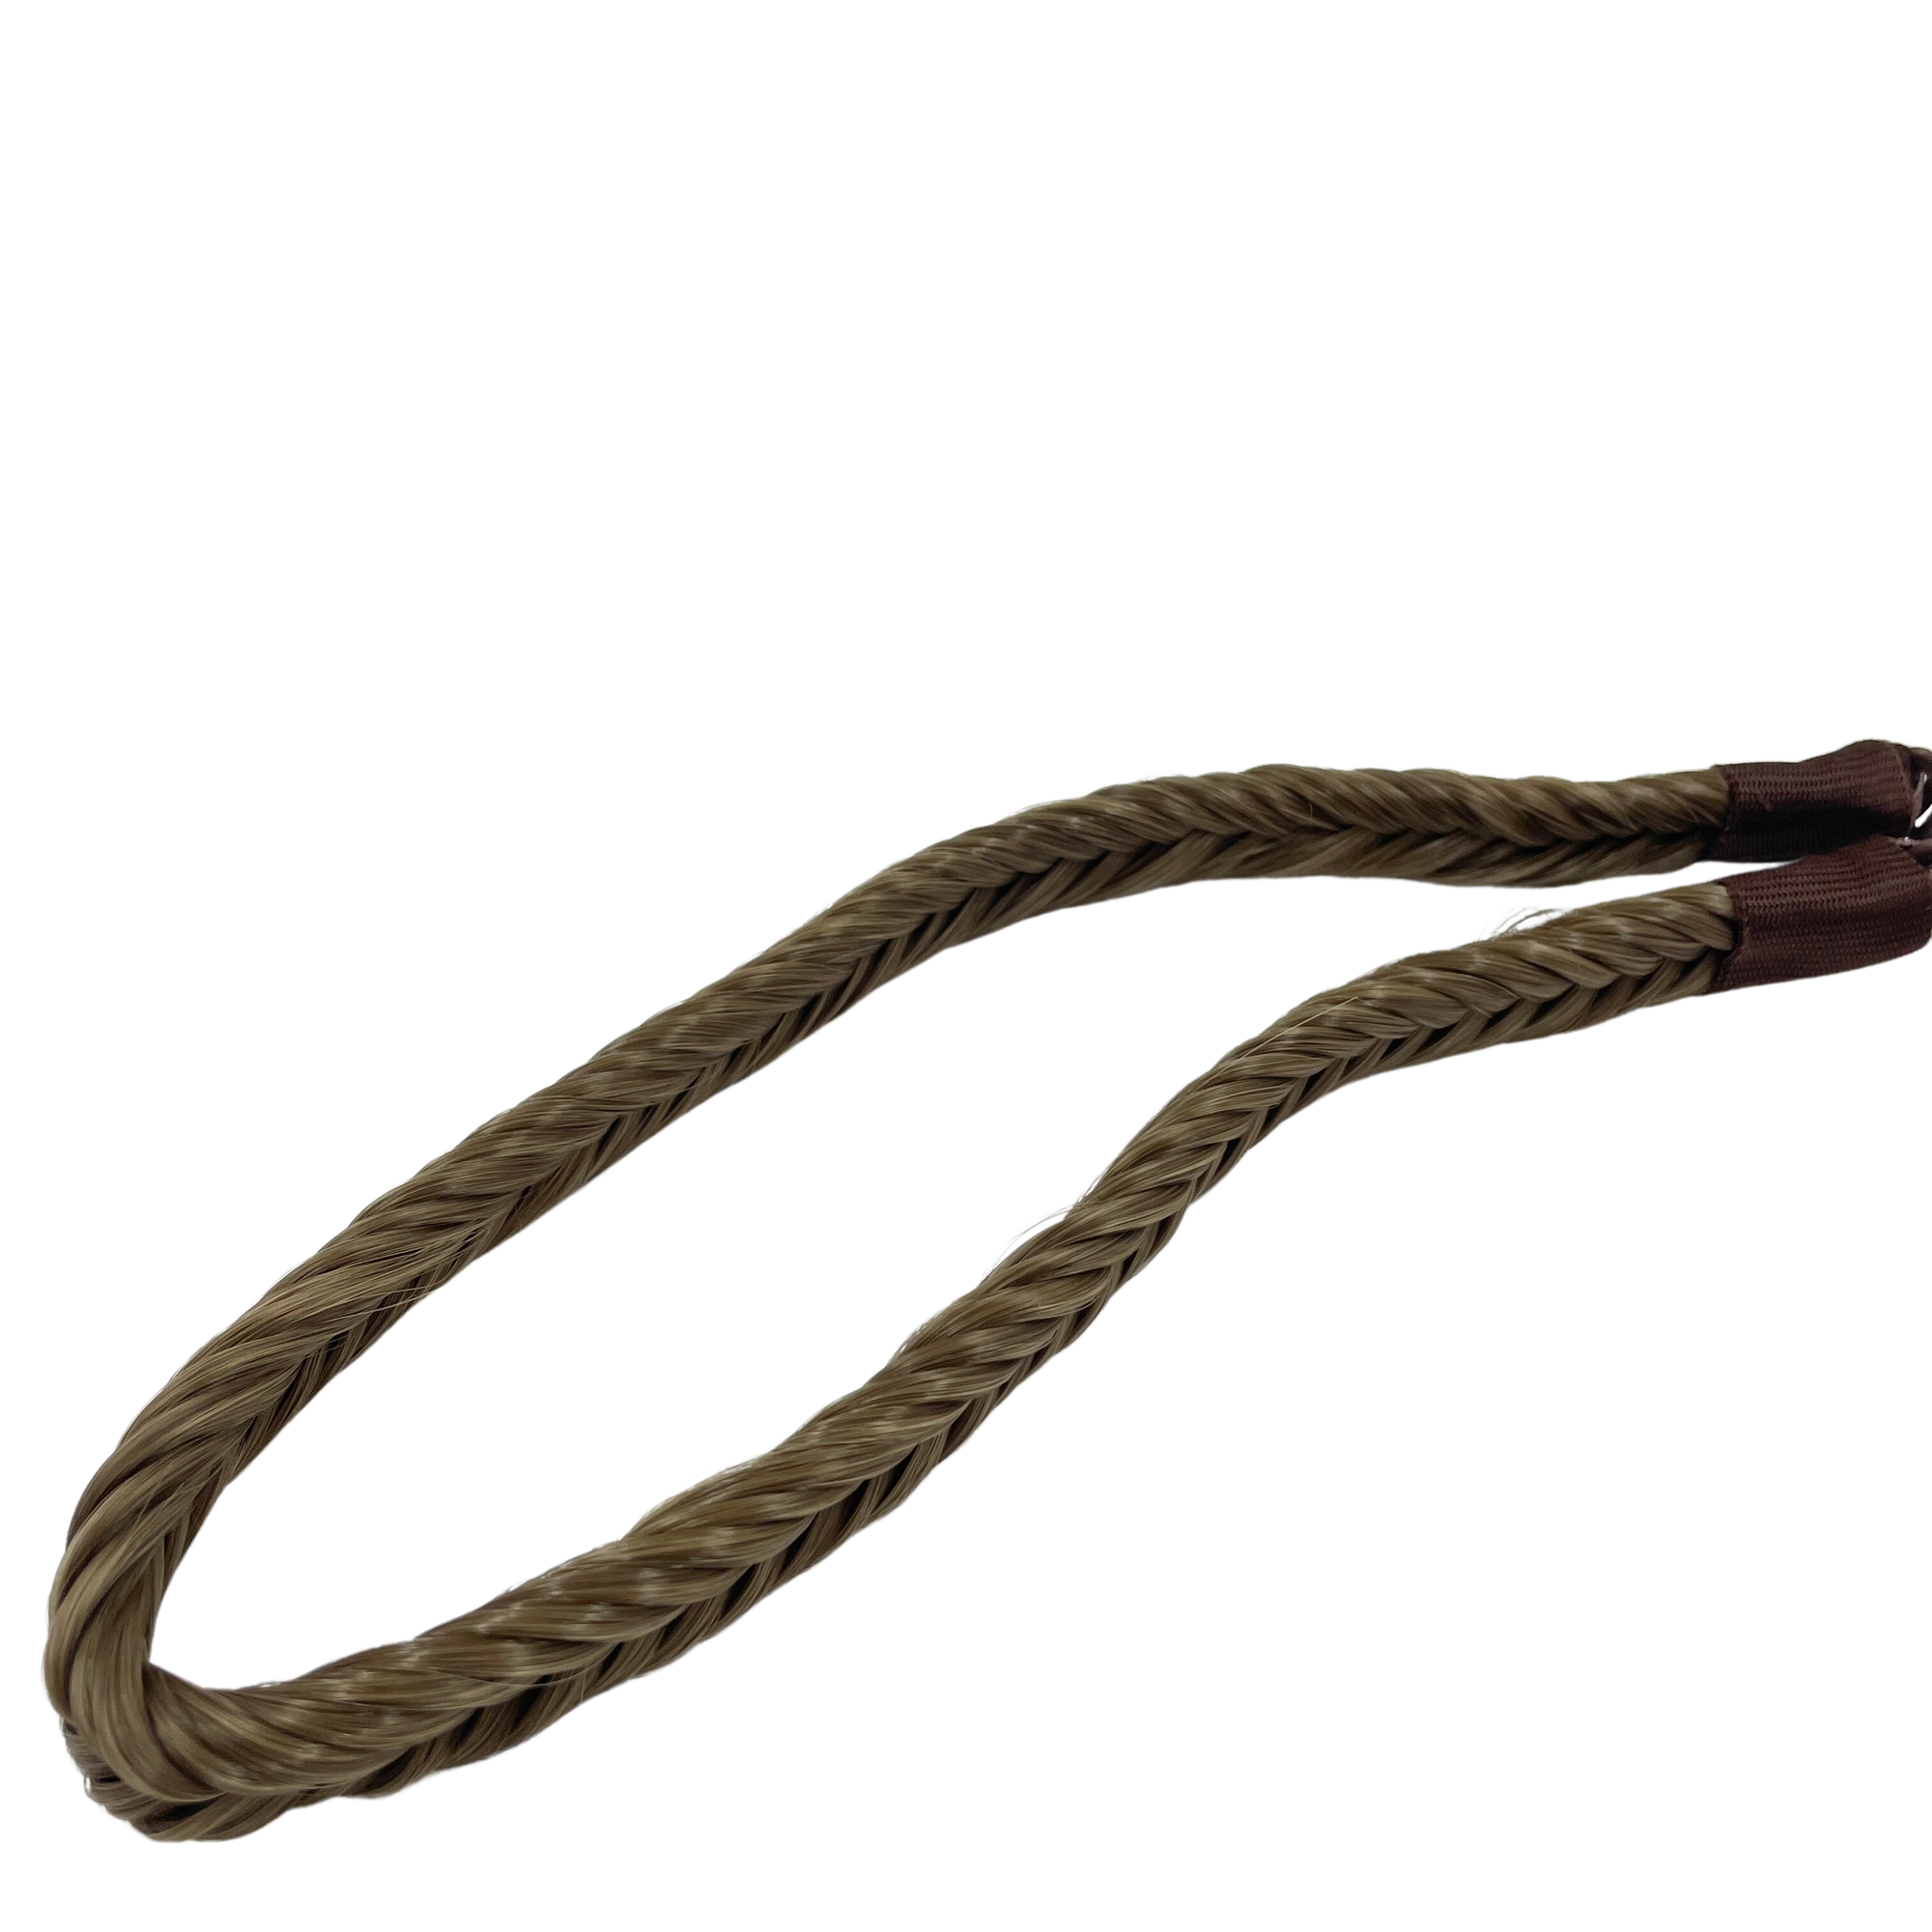 image of hair rehab london plait braid fishtail headband hairband in shade blondette